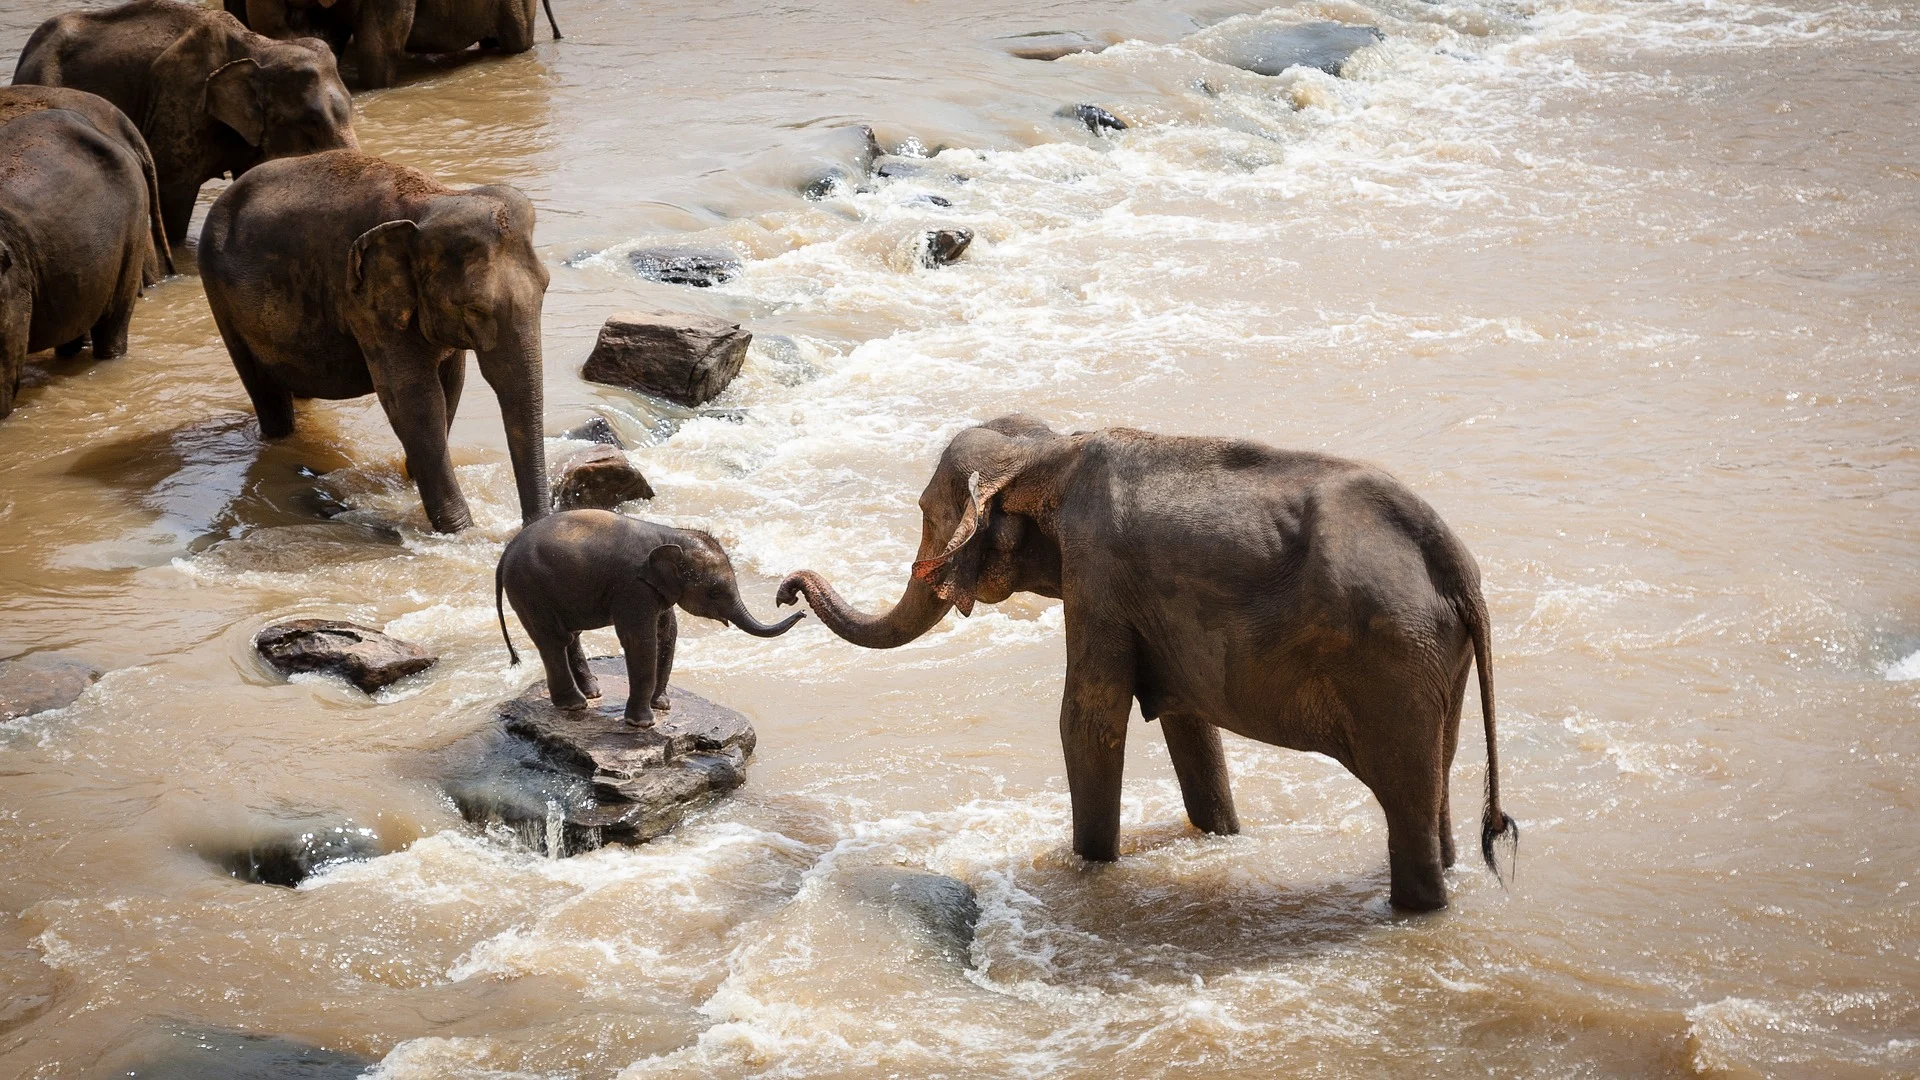 Overcoming Fear: Herd Helps Baby Elephant Cross Rushing River